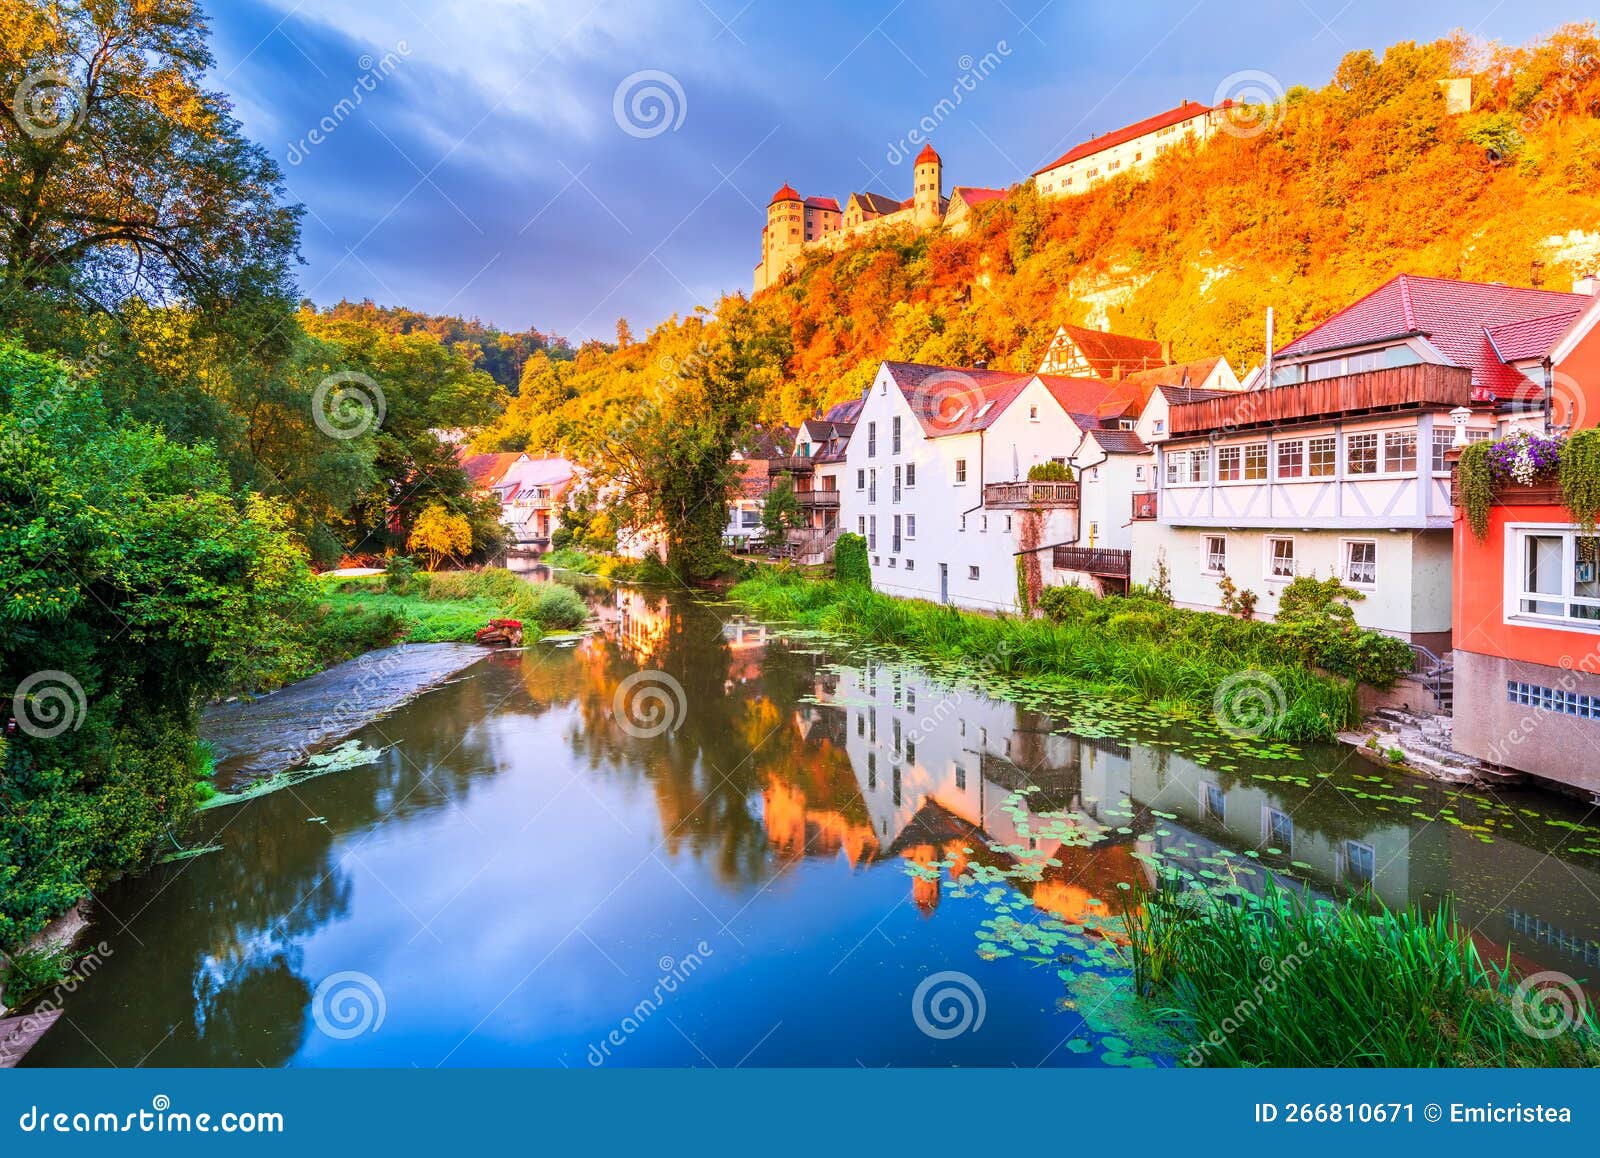 harburg, swabia. beautiful medieval village in historical bavaria, germany. wornitz river